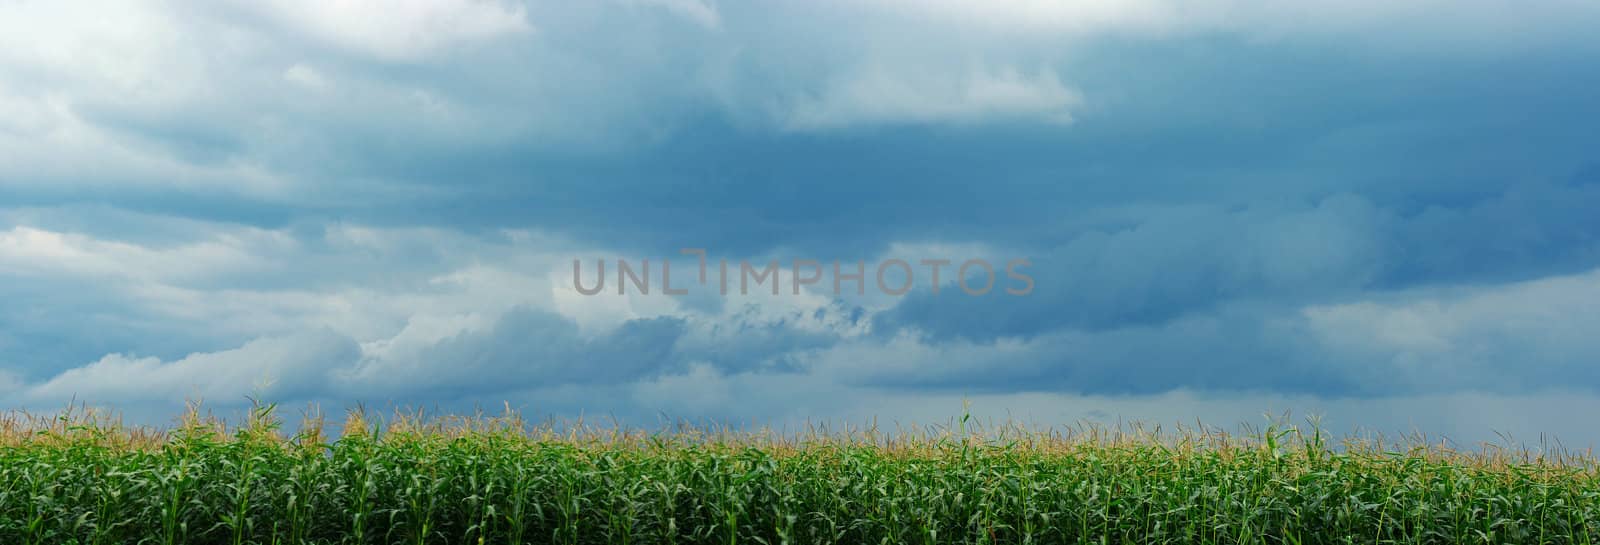 corn field over storm sky  by dolnikow